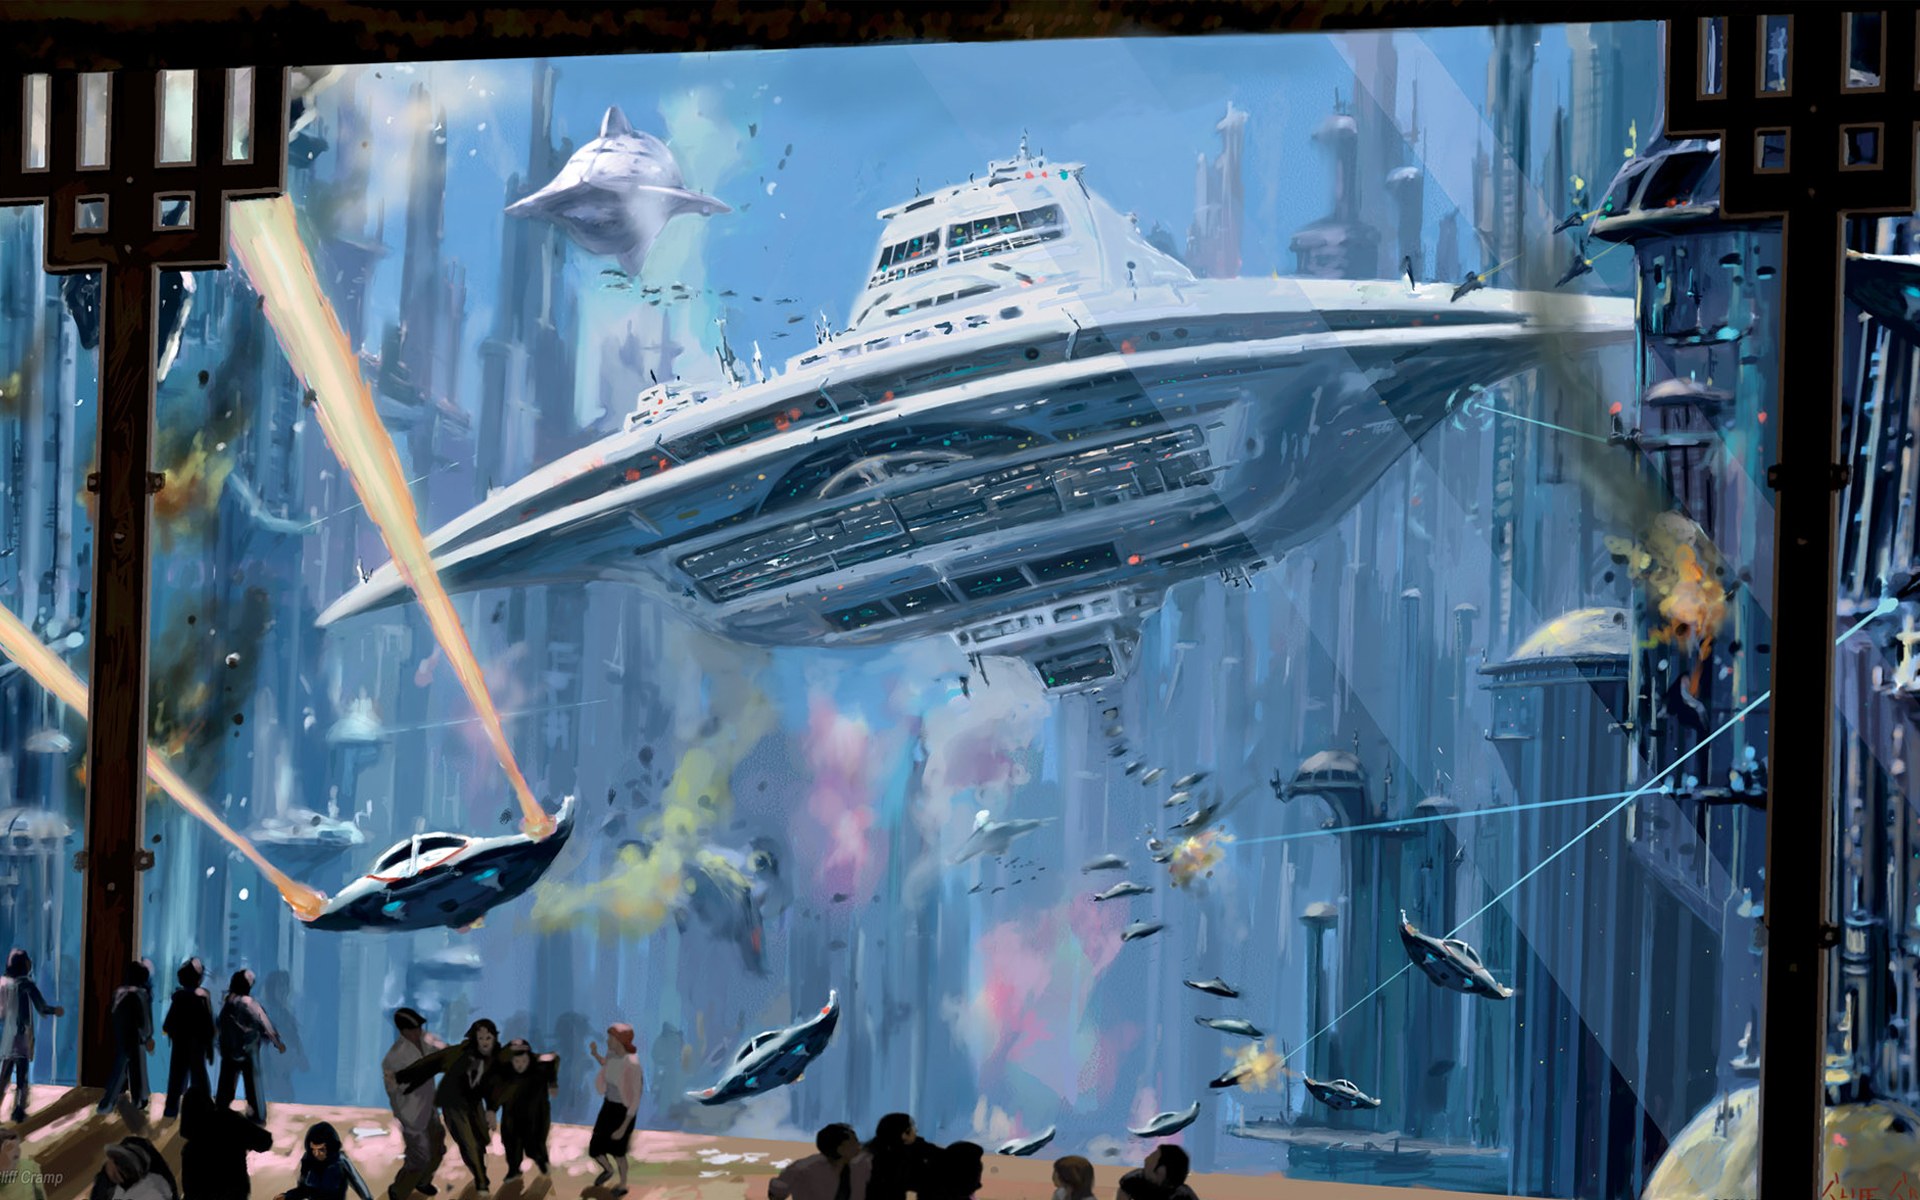 Sci-fi battle scene wallpaper for desktop.